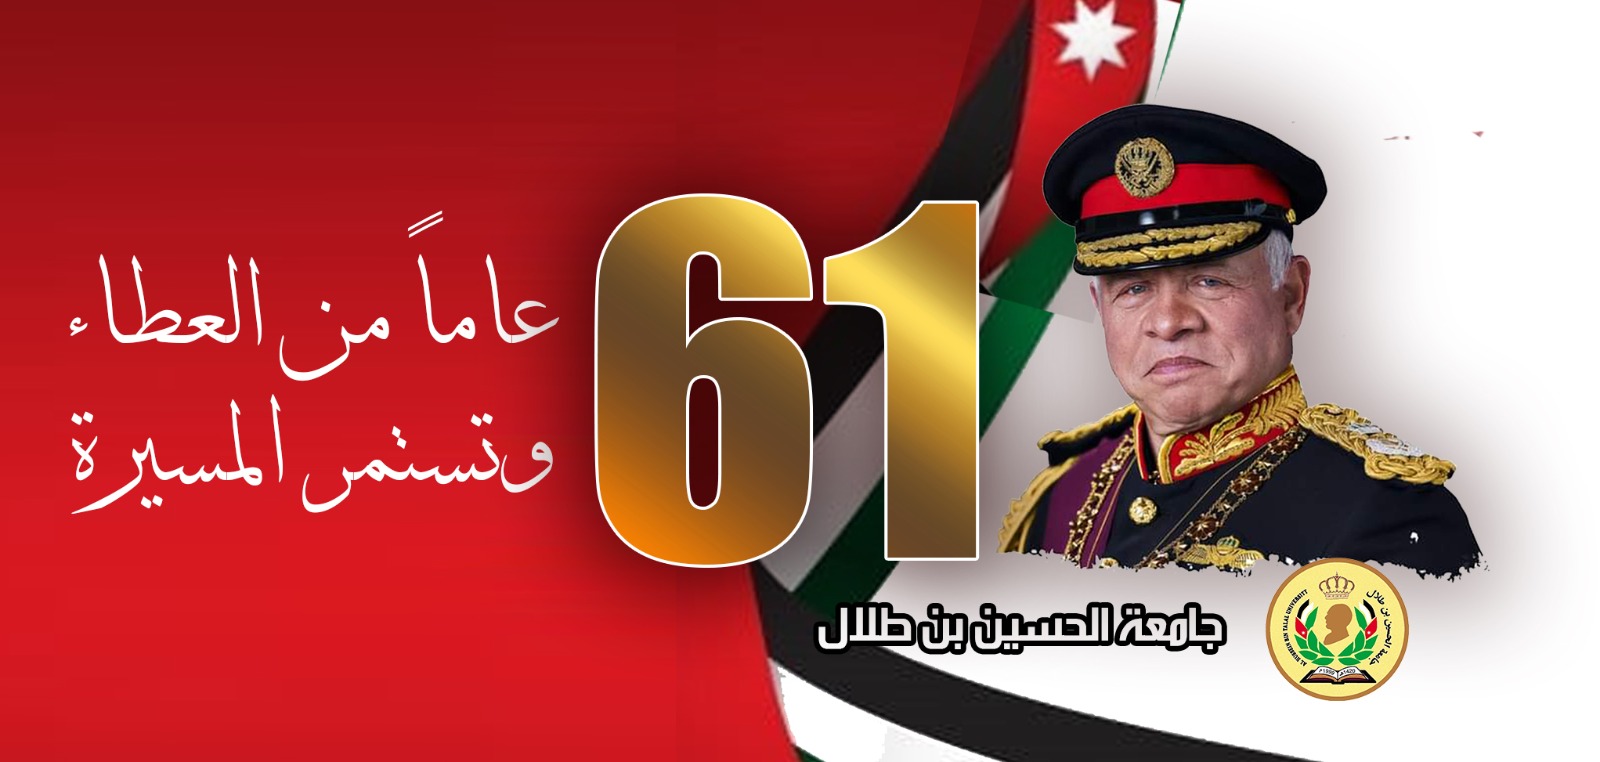 Al-Hussein Bin Talal University congratulates His Majesty the King on his auspicious birthday.